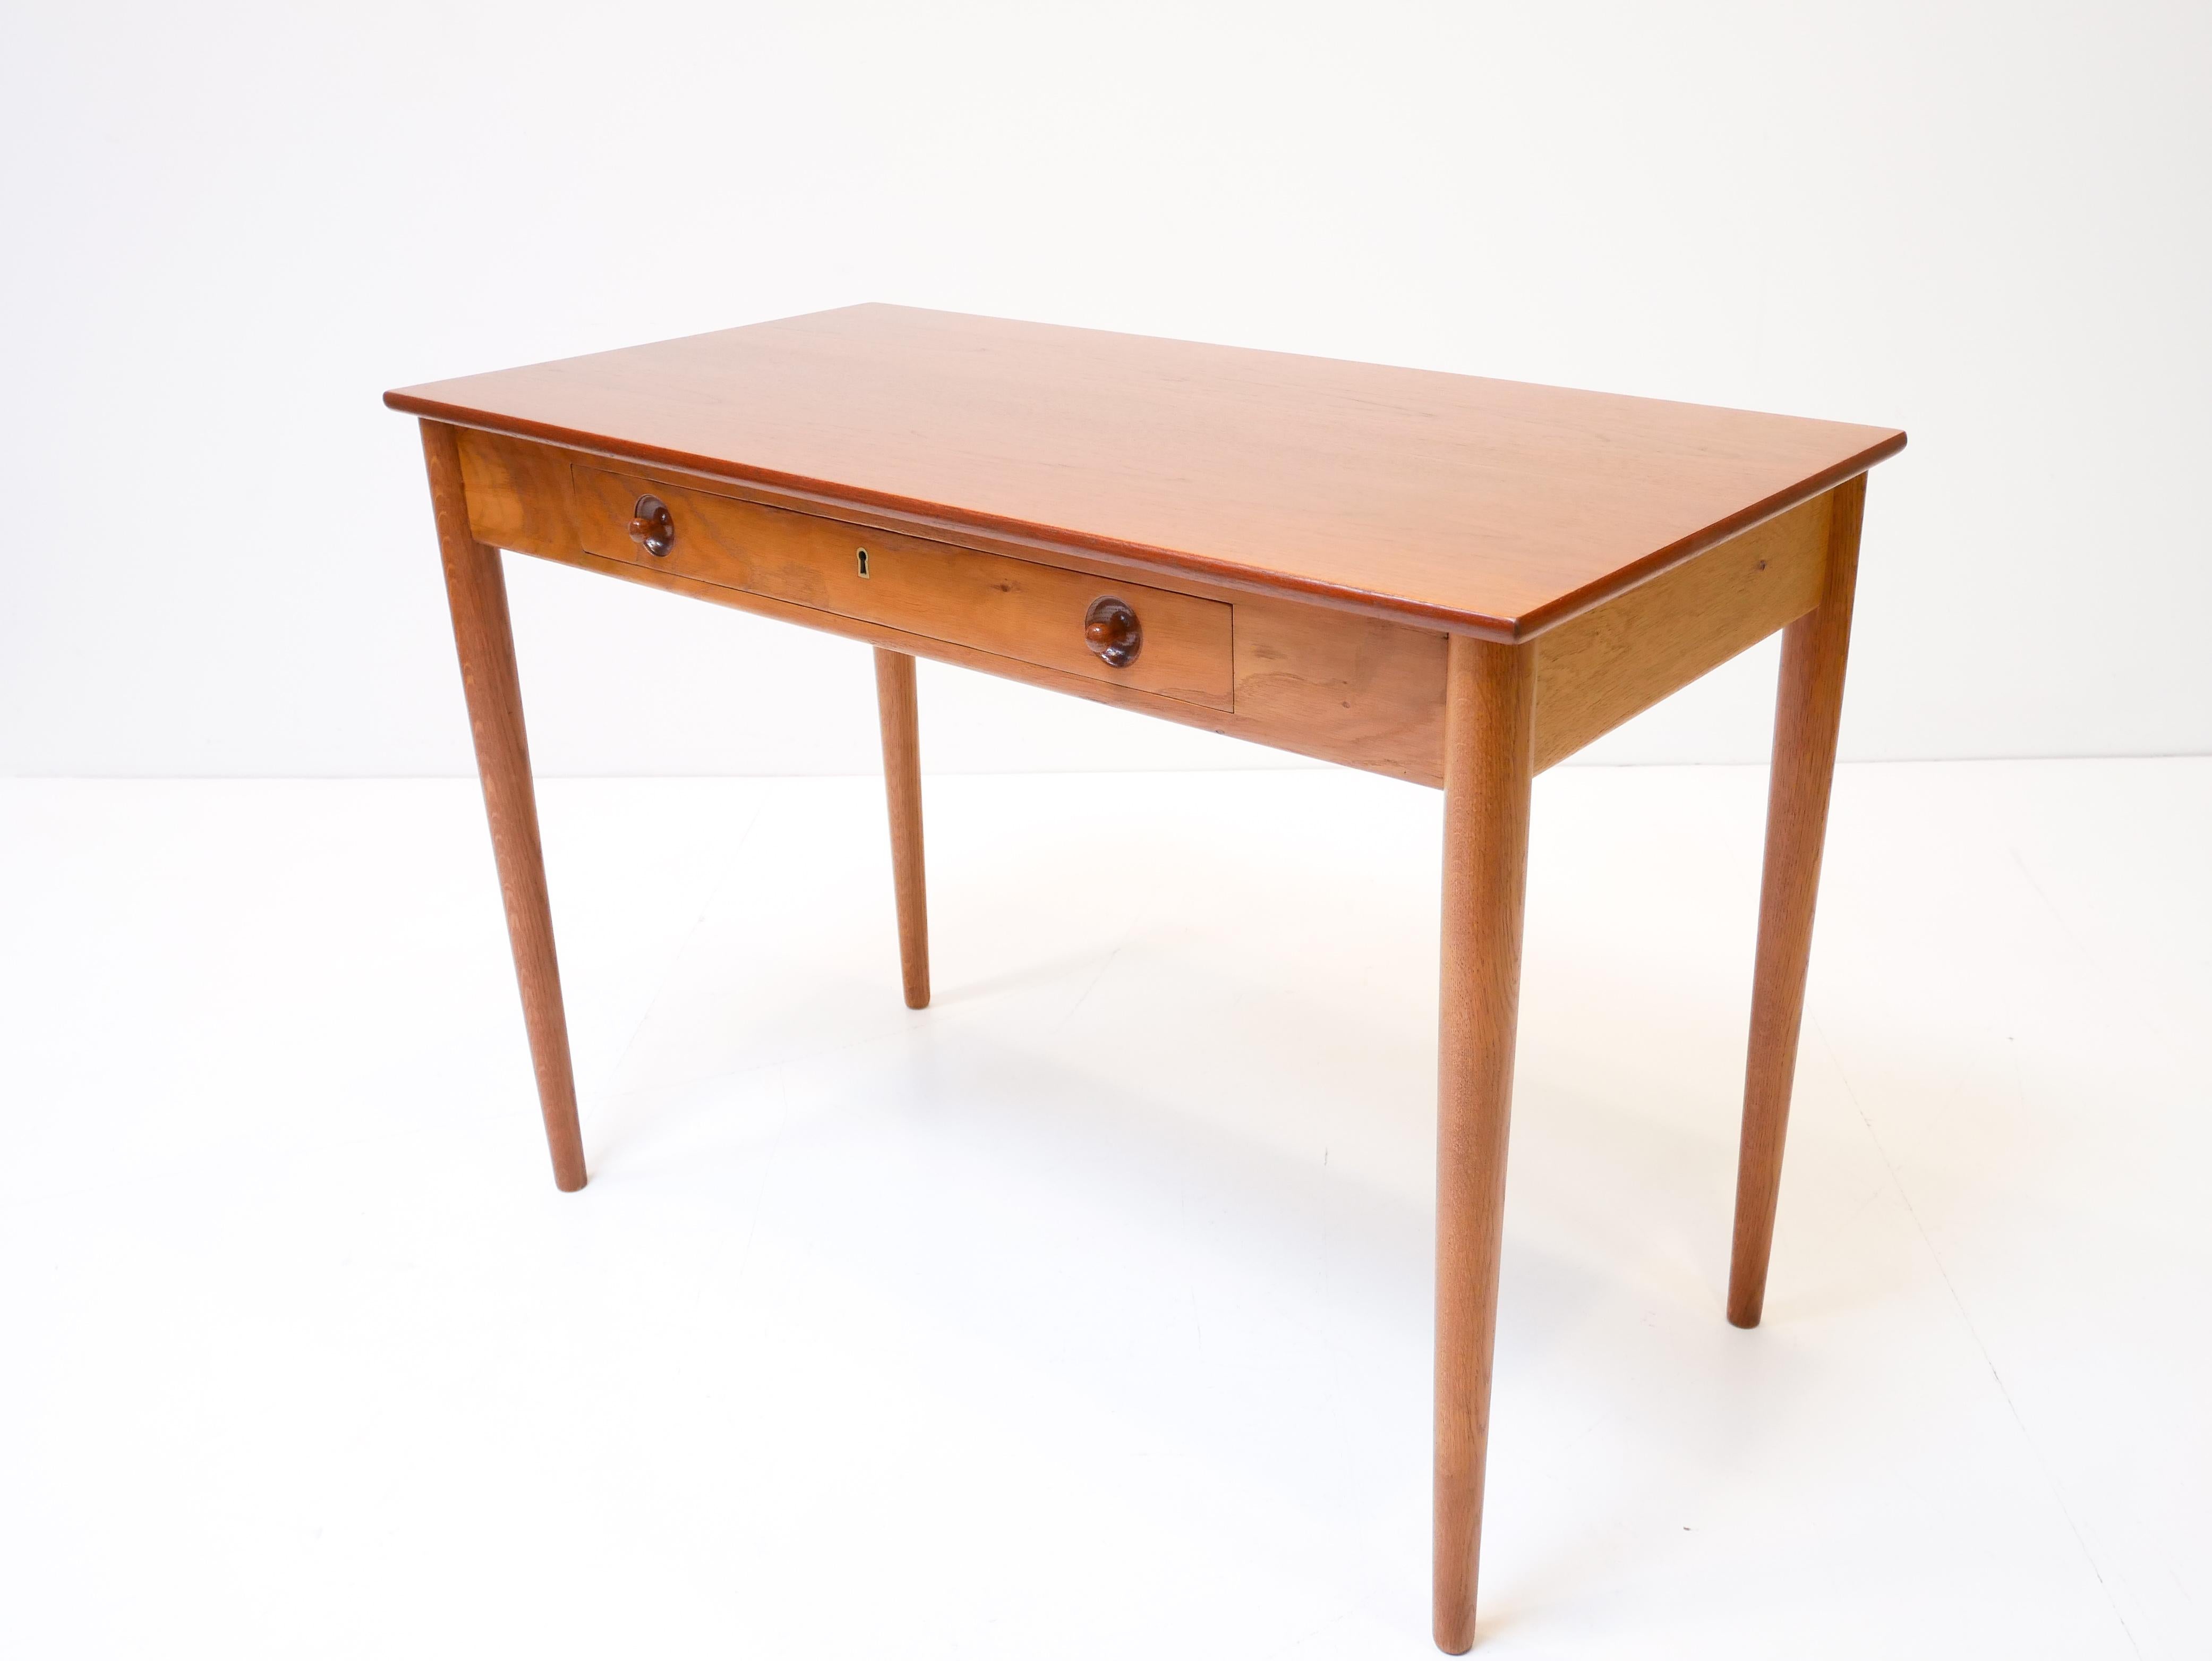 Hans Wegner desk, model Ry 32 in the beautiful combination teak and oak. 
Marked Ry möbler 1959.